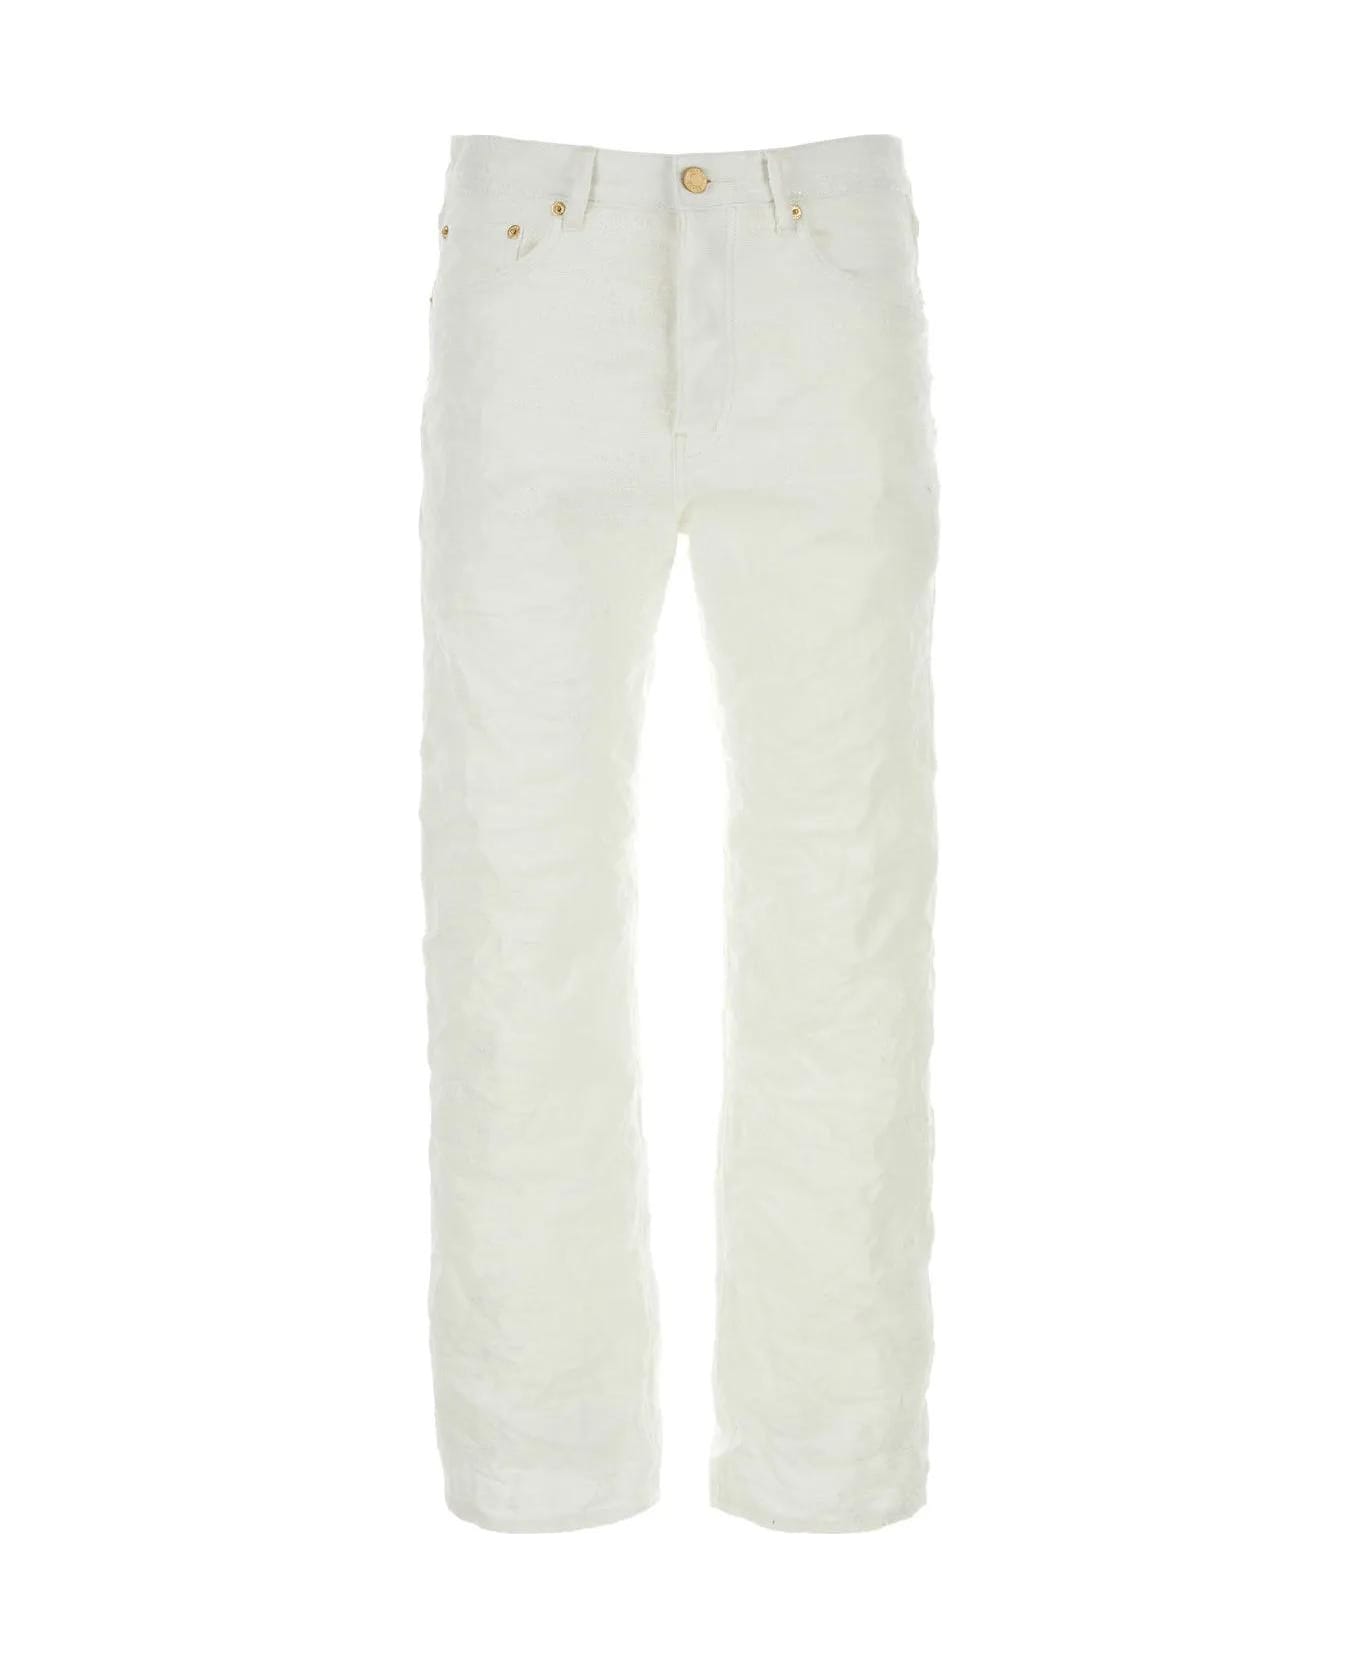 Purple Brand White Denim Jeans - WHITE